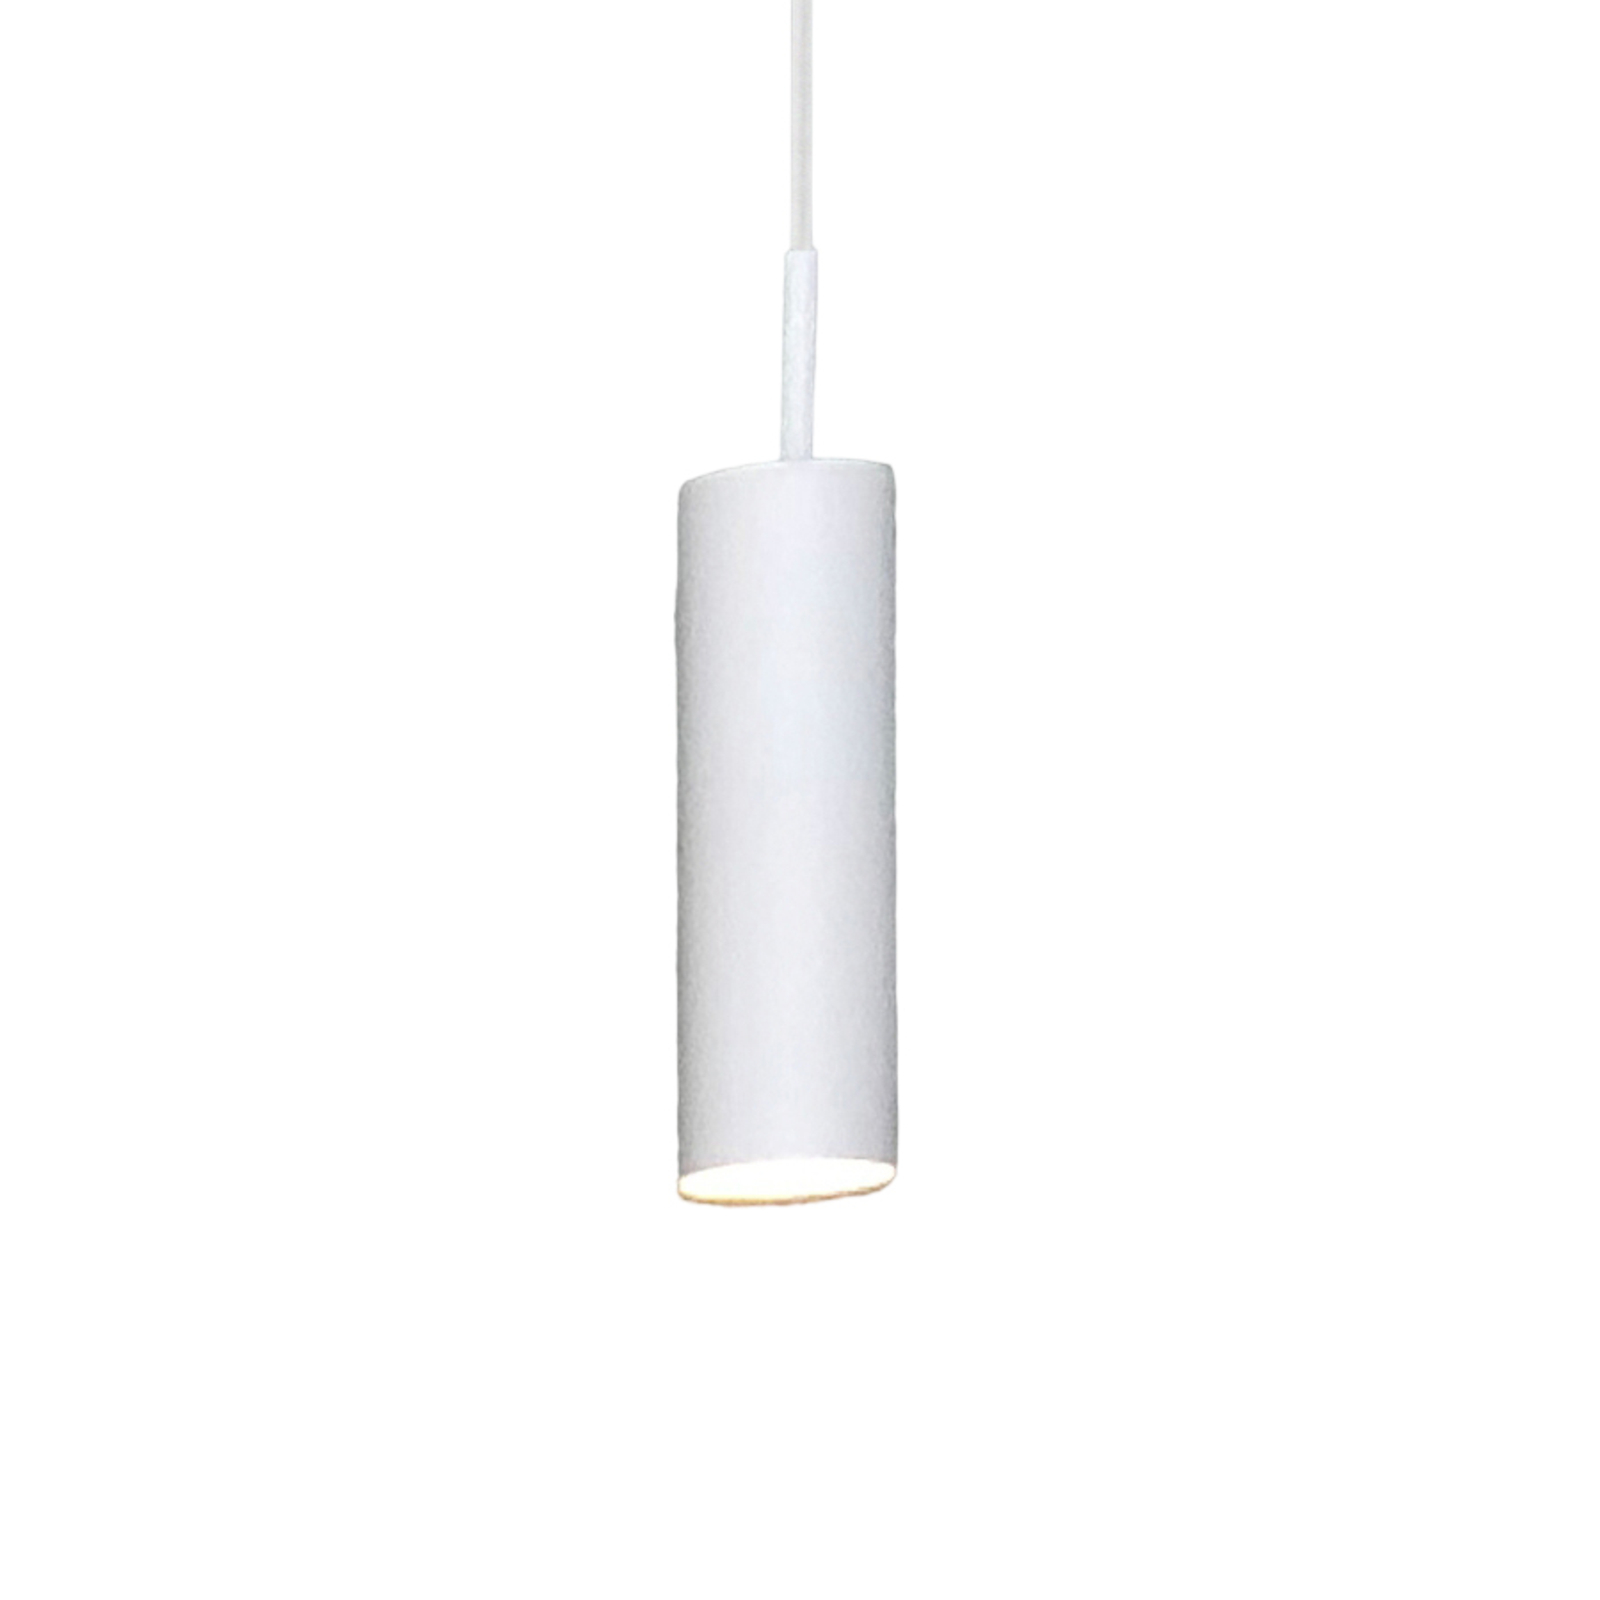 MIB 6 pendant light with a GU10 socket, white